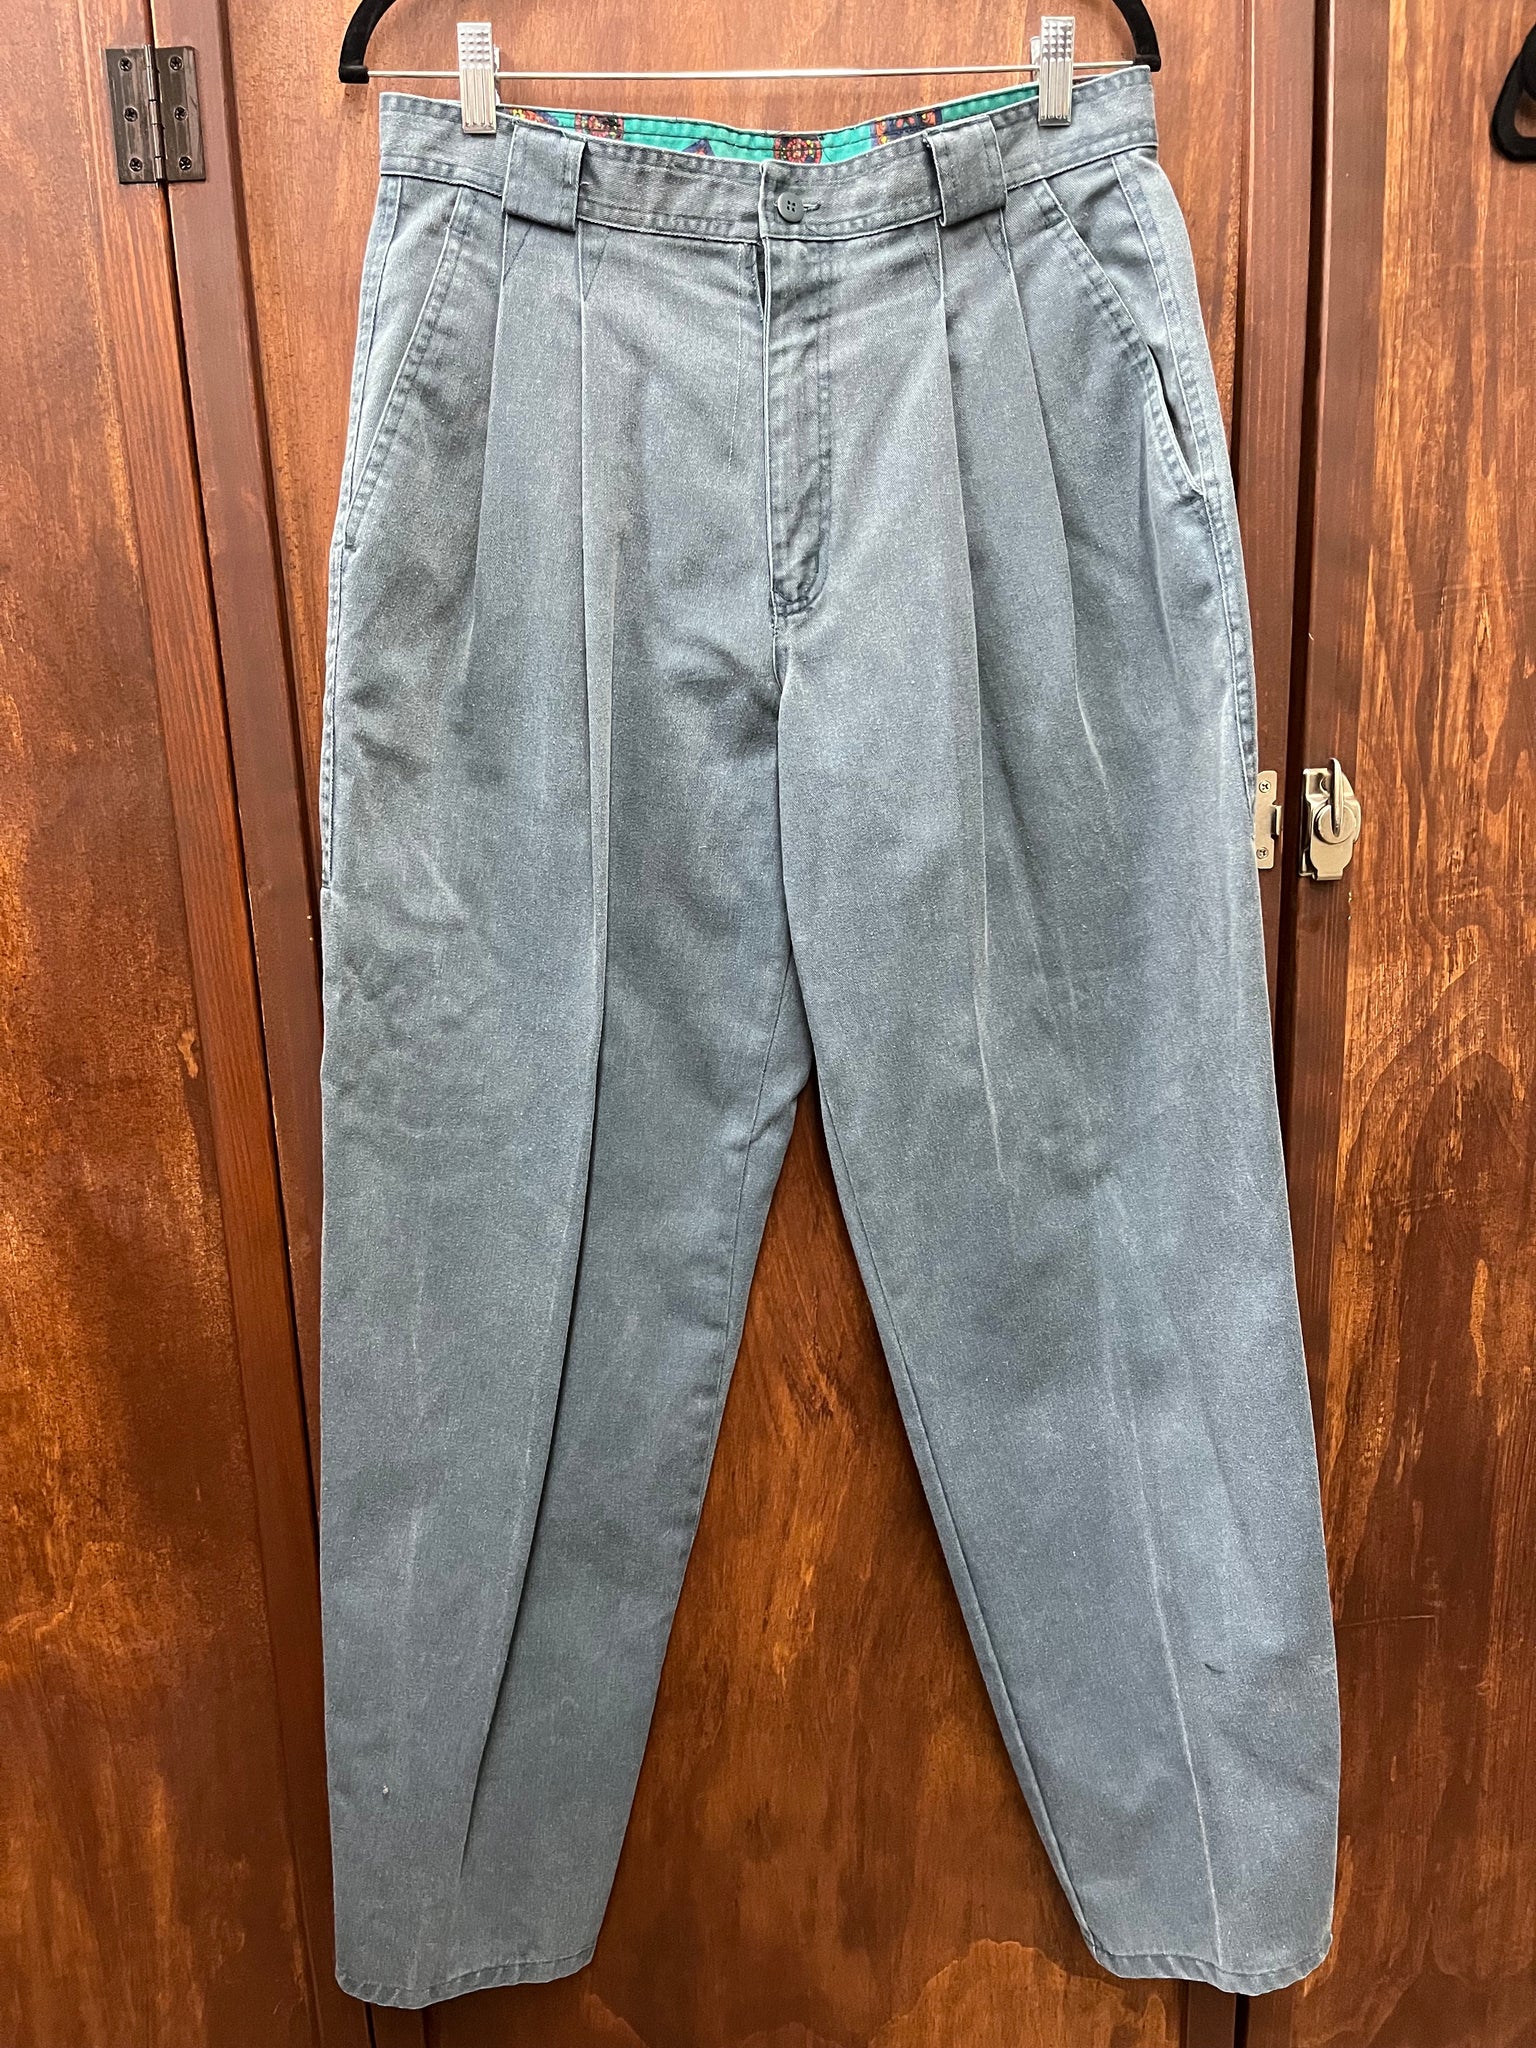 1990s MENS PANTS- Bugle Boy slate grey slacks